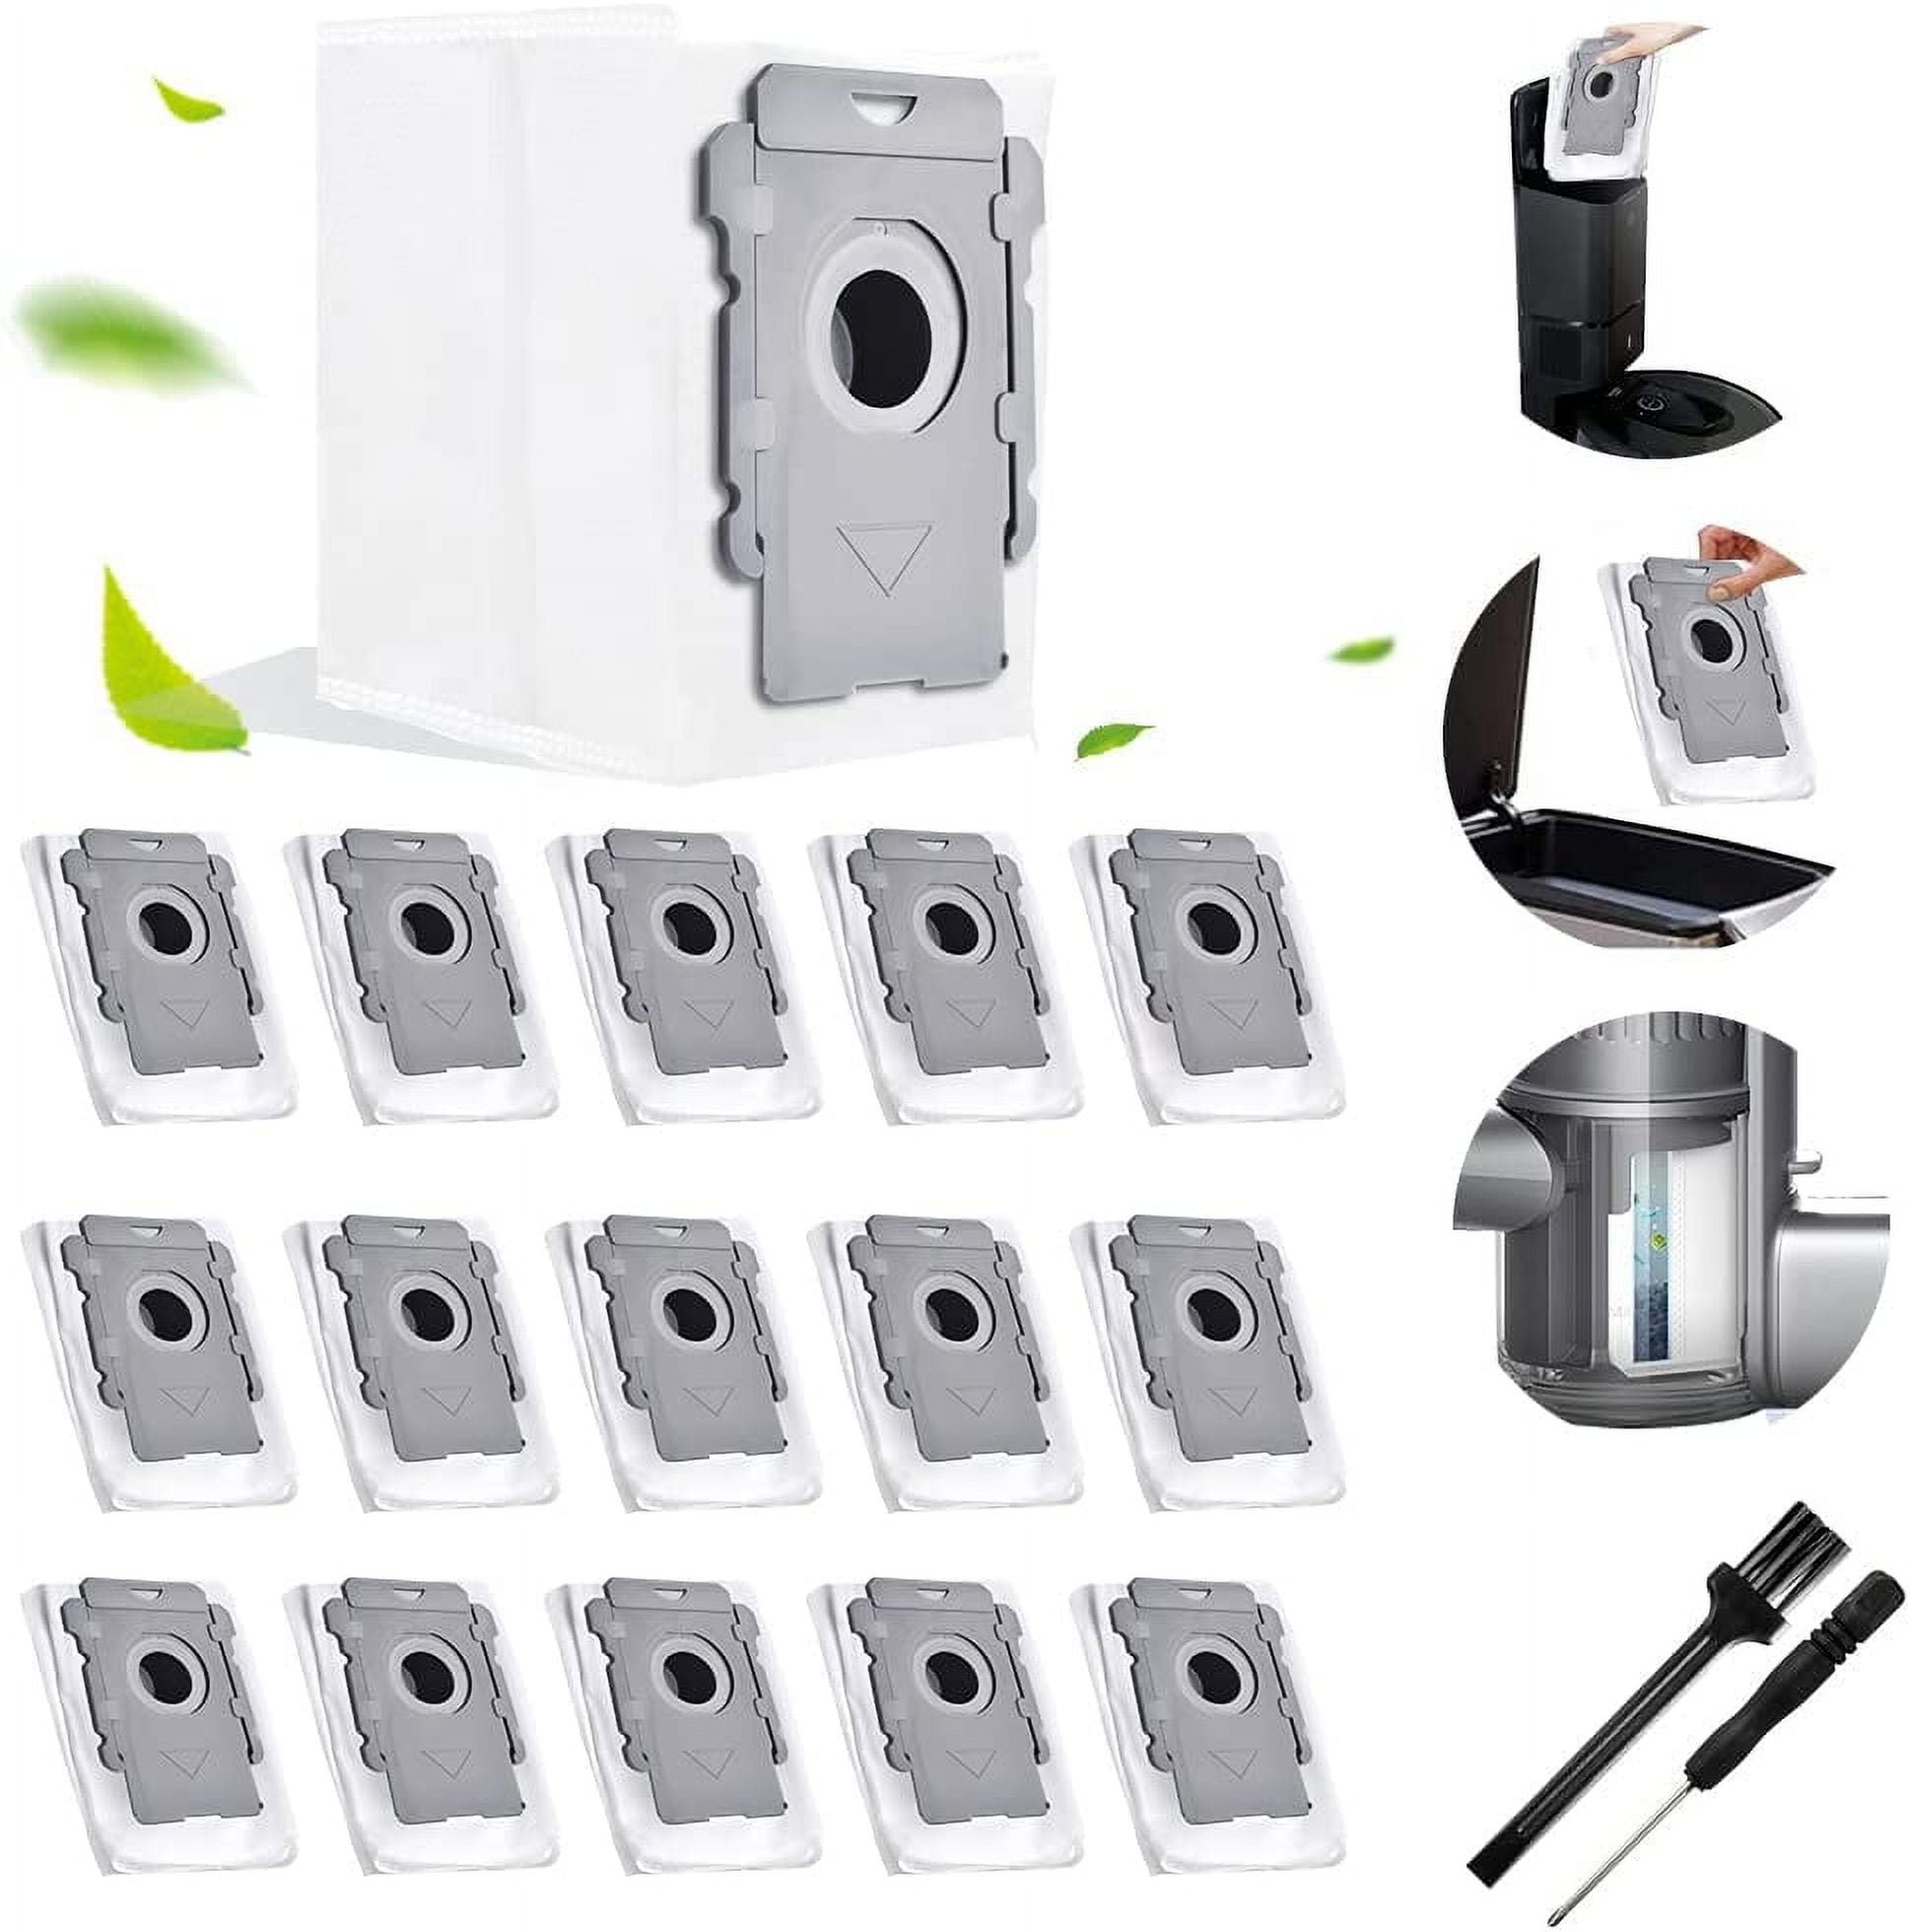 10 Pack Vacuum Bags Compatible with iRobot Roomba i7 i7+ i7 Plus (7550)  i3+(3550) i6+ (6550) i8+(8550) s9 s9+ (9550) i & s Automatic Dirt Disposal